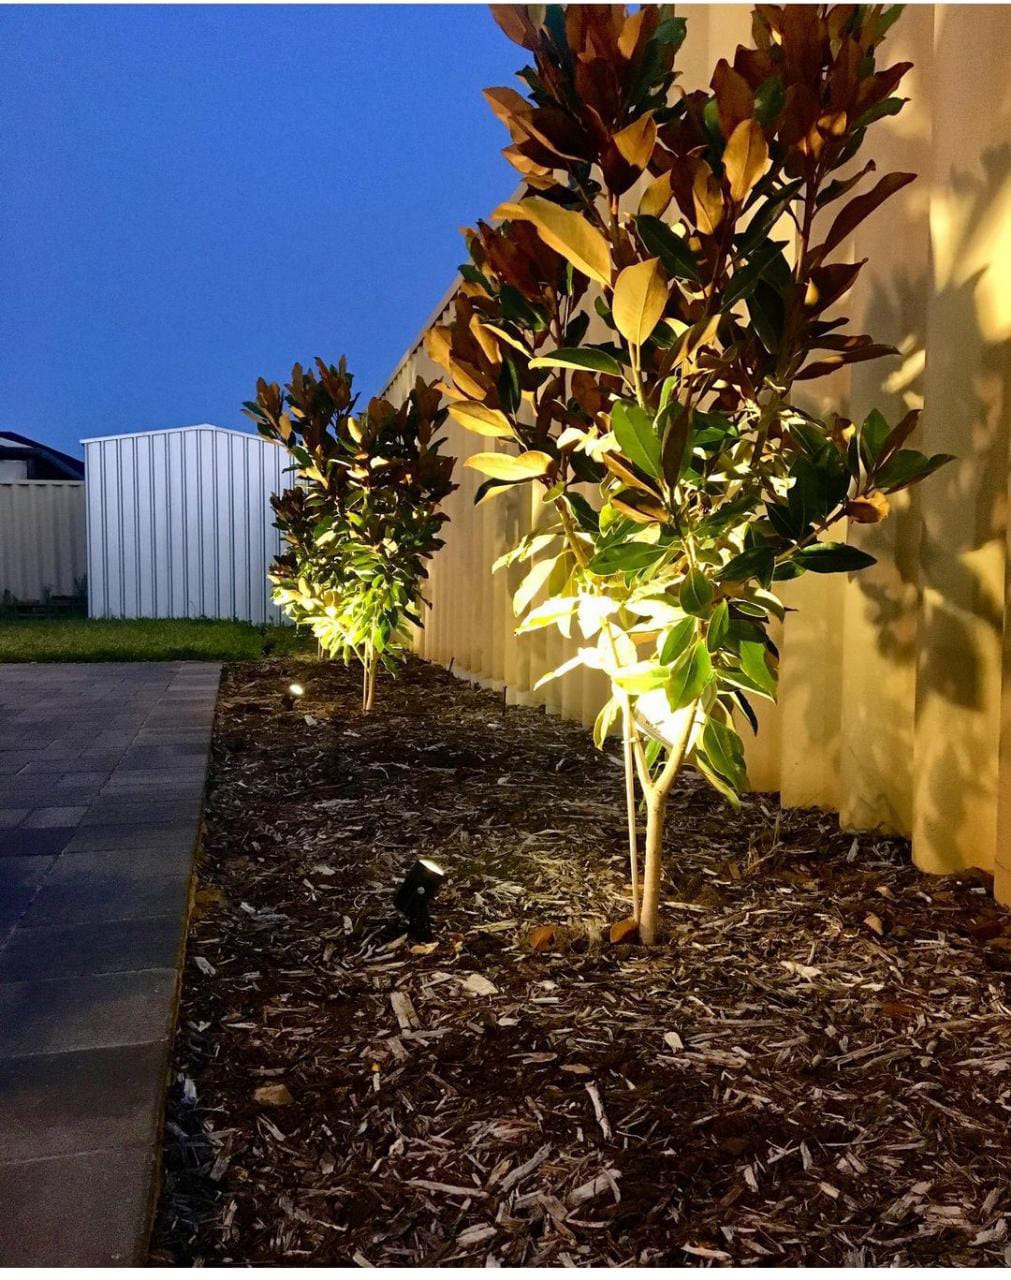 LED Lighting Perth